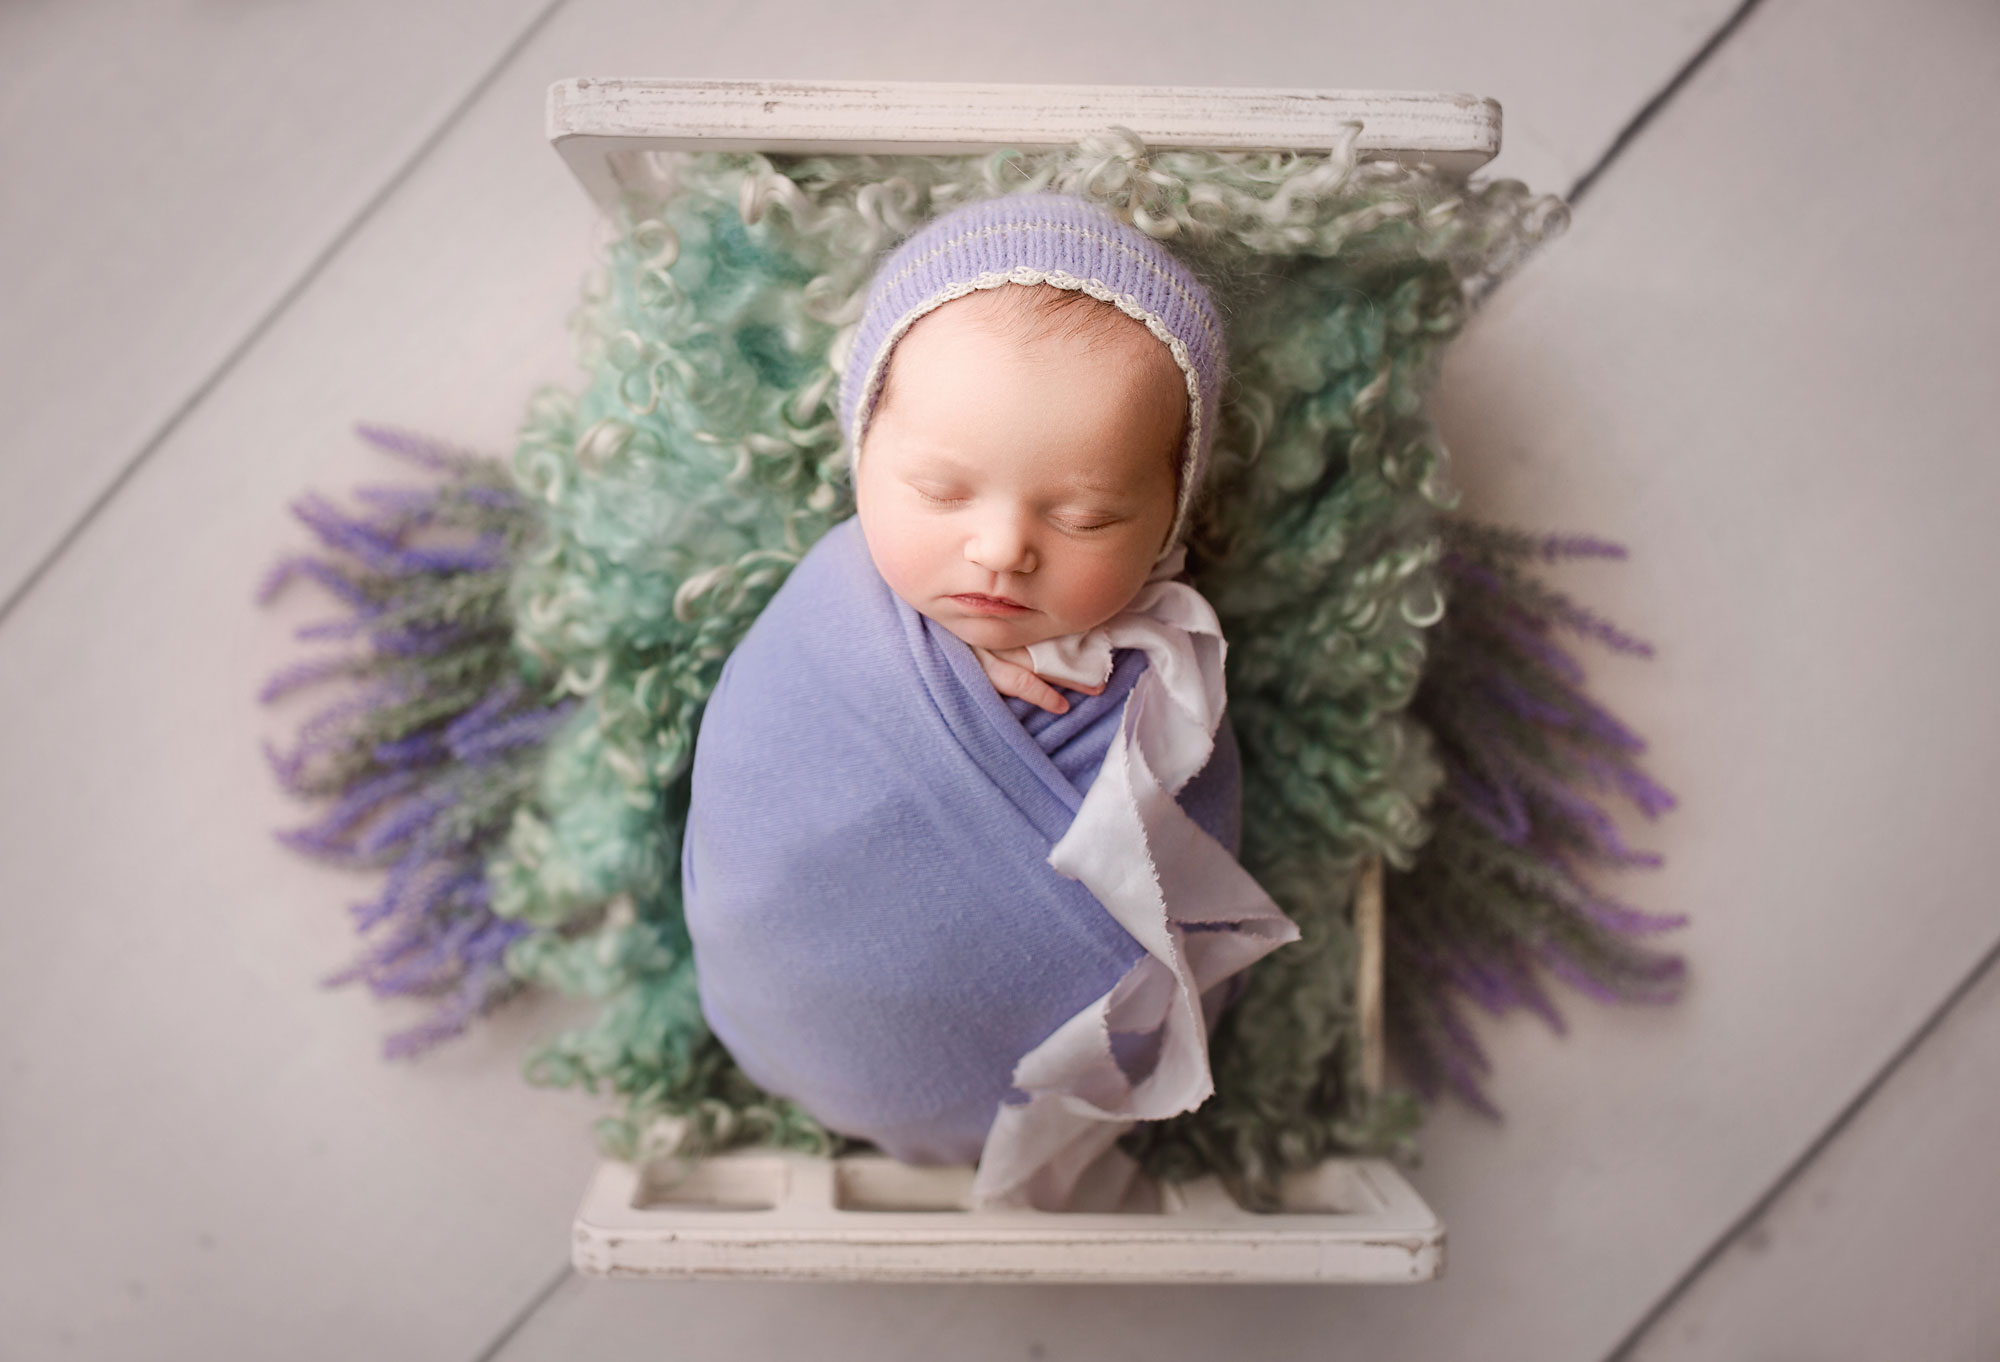 flemington nj newborn baby sleeping in a small bed lavender flowers